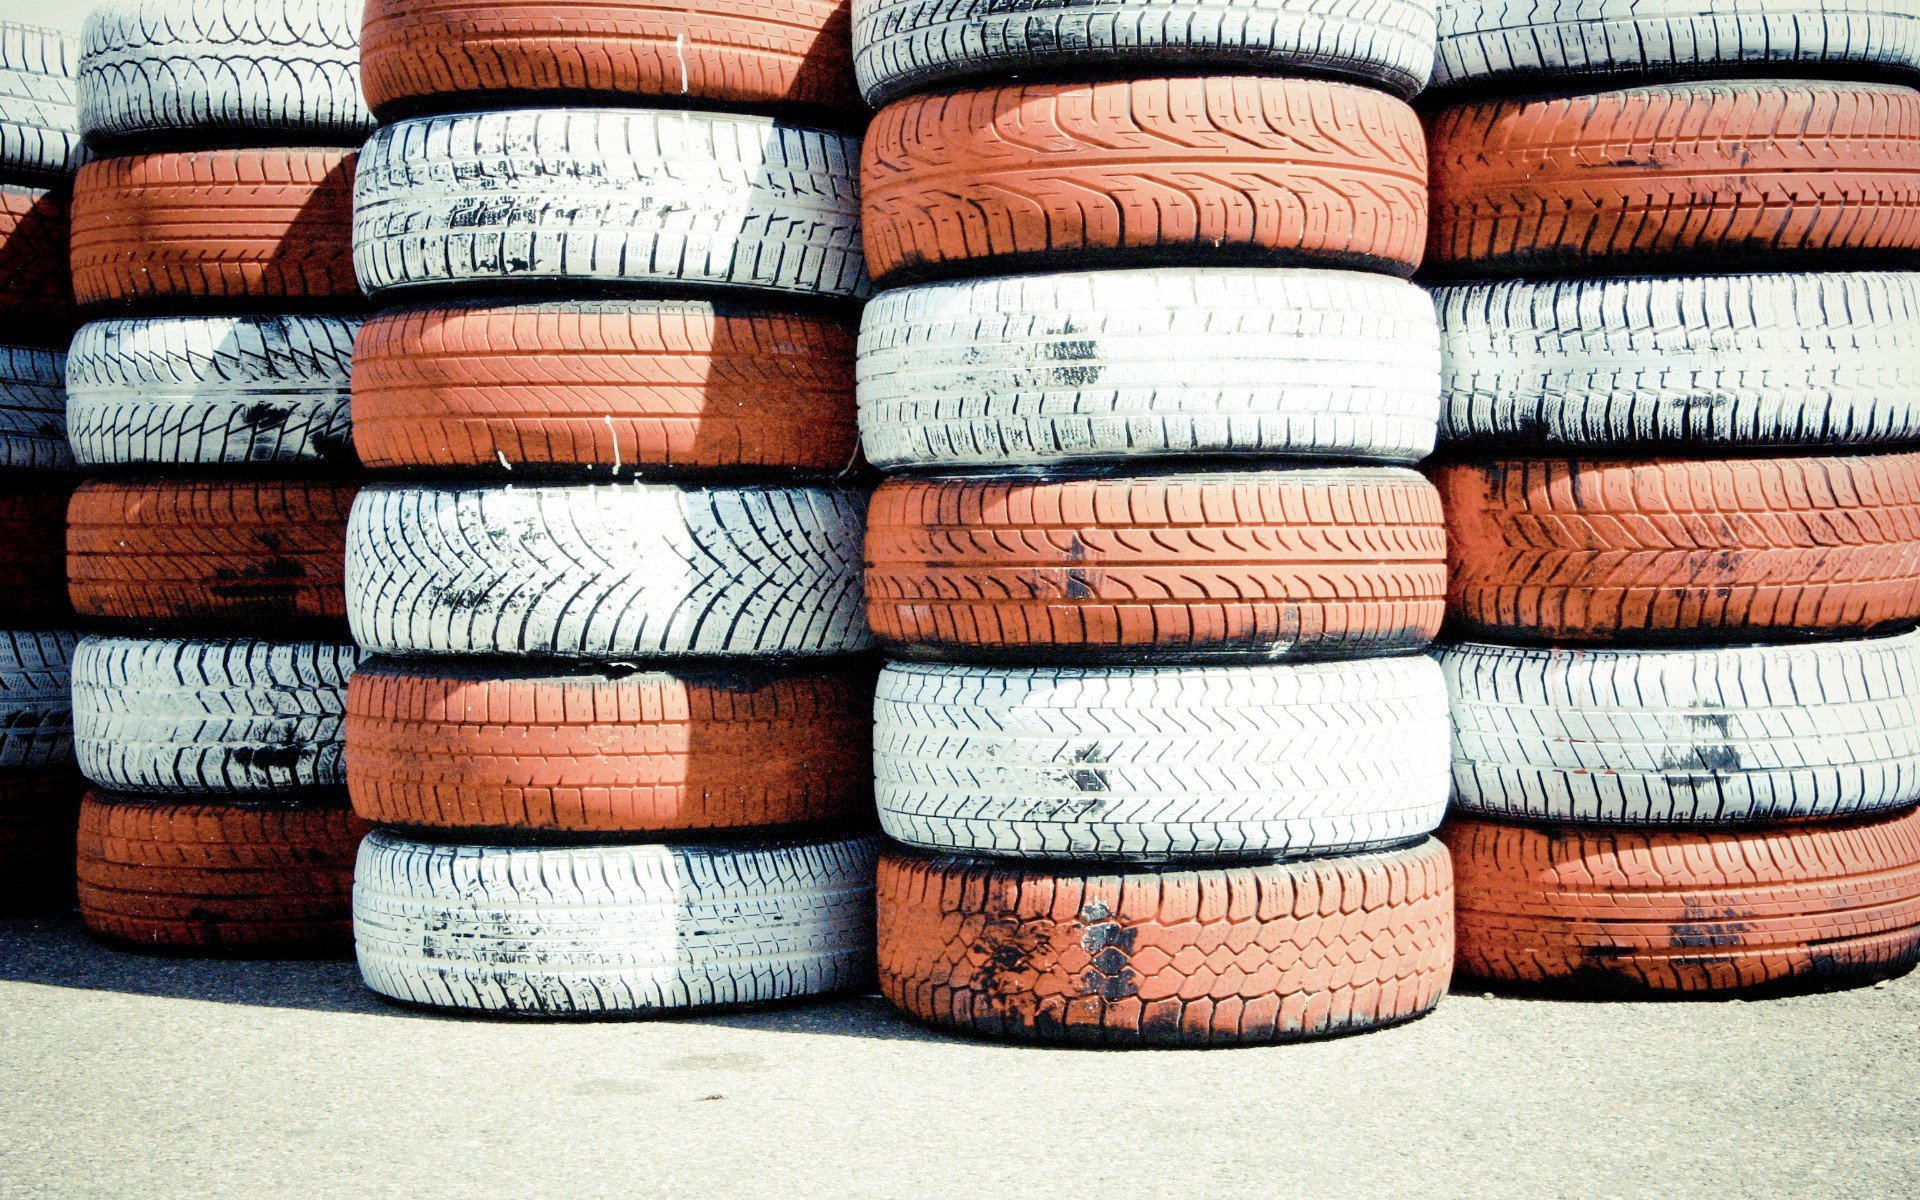 tires, Rubber Wallpaper